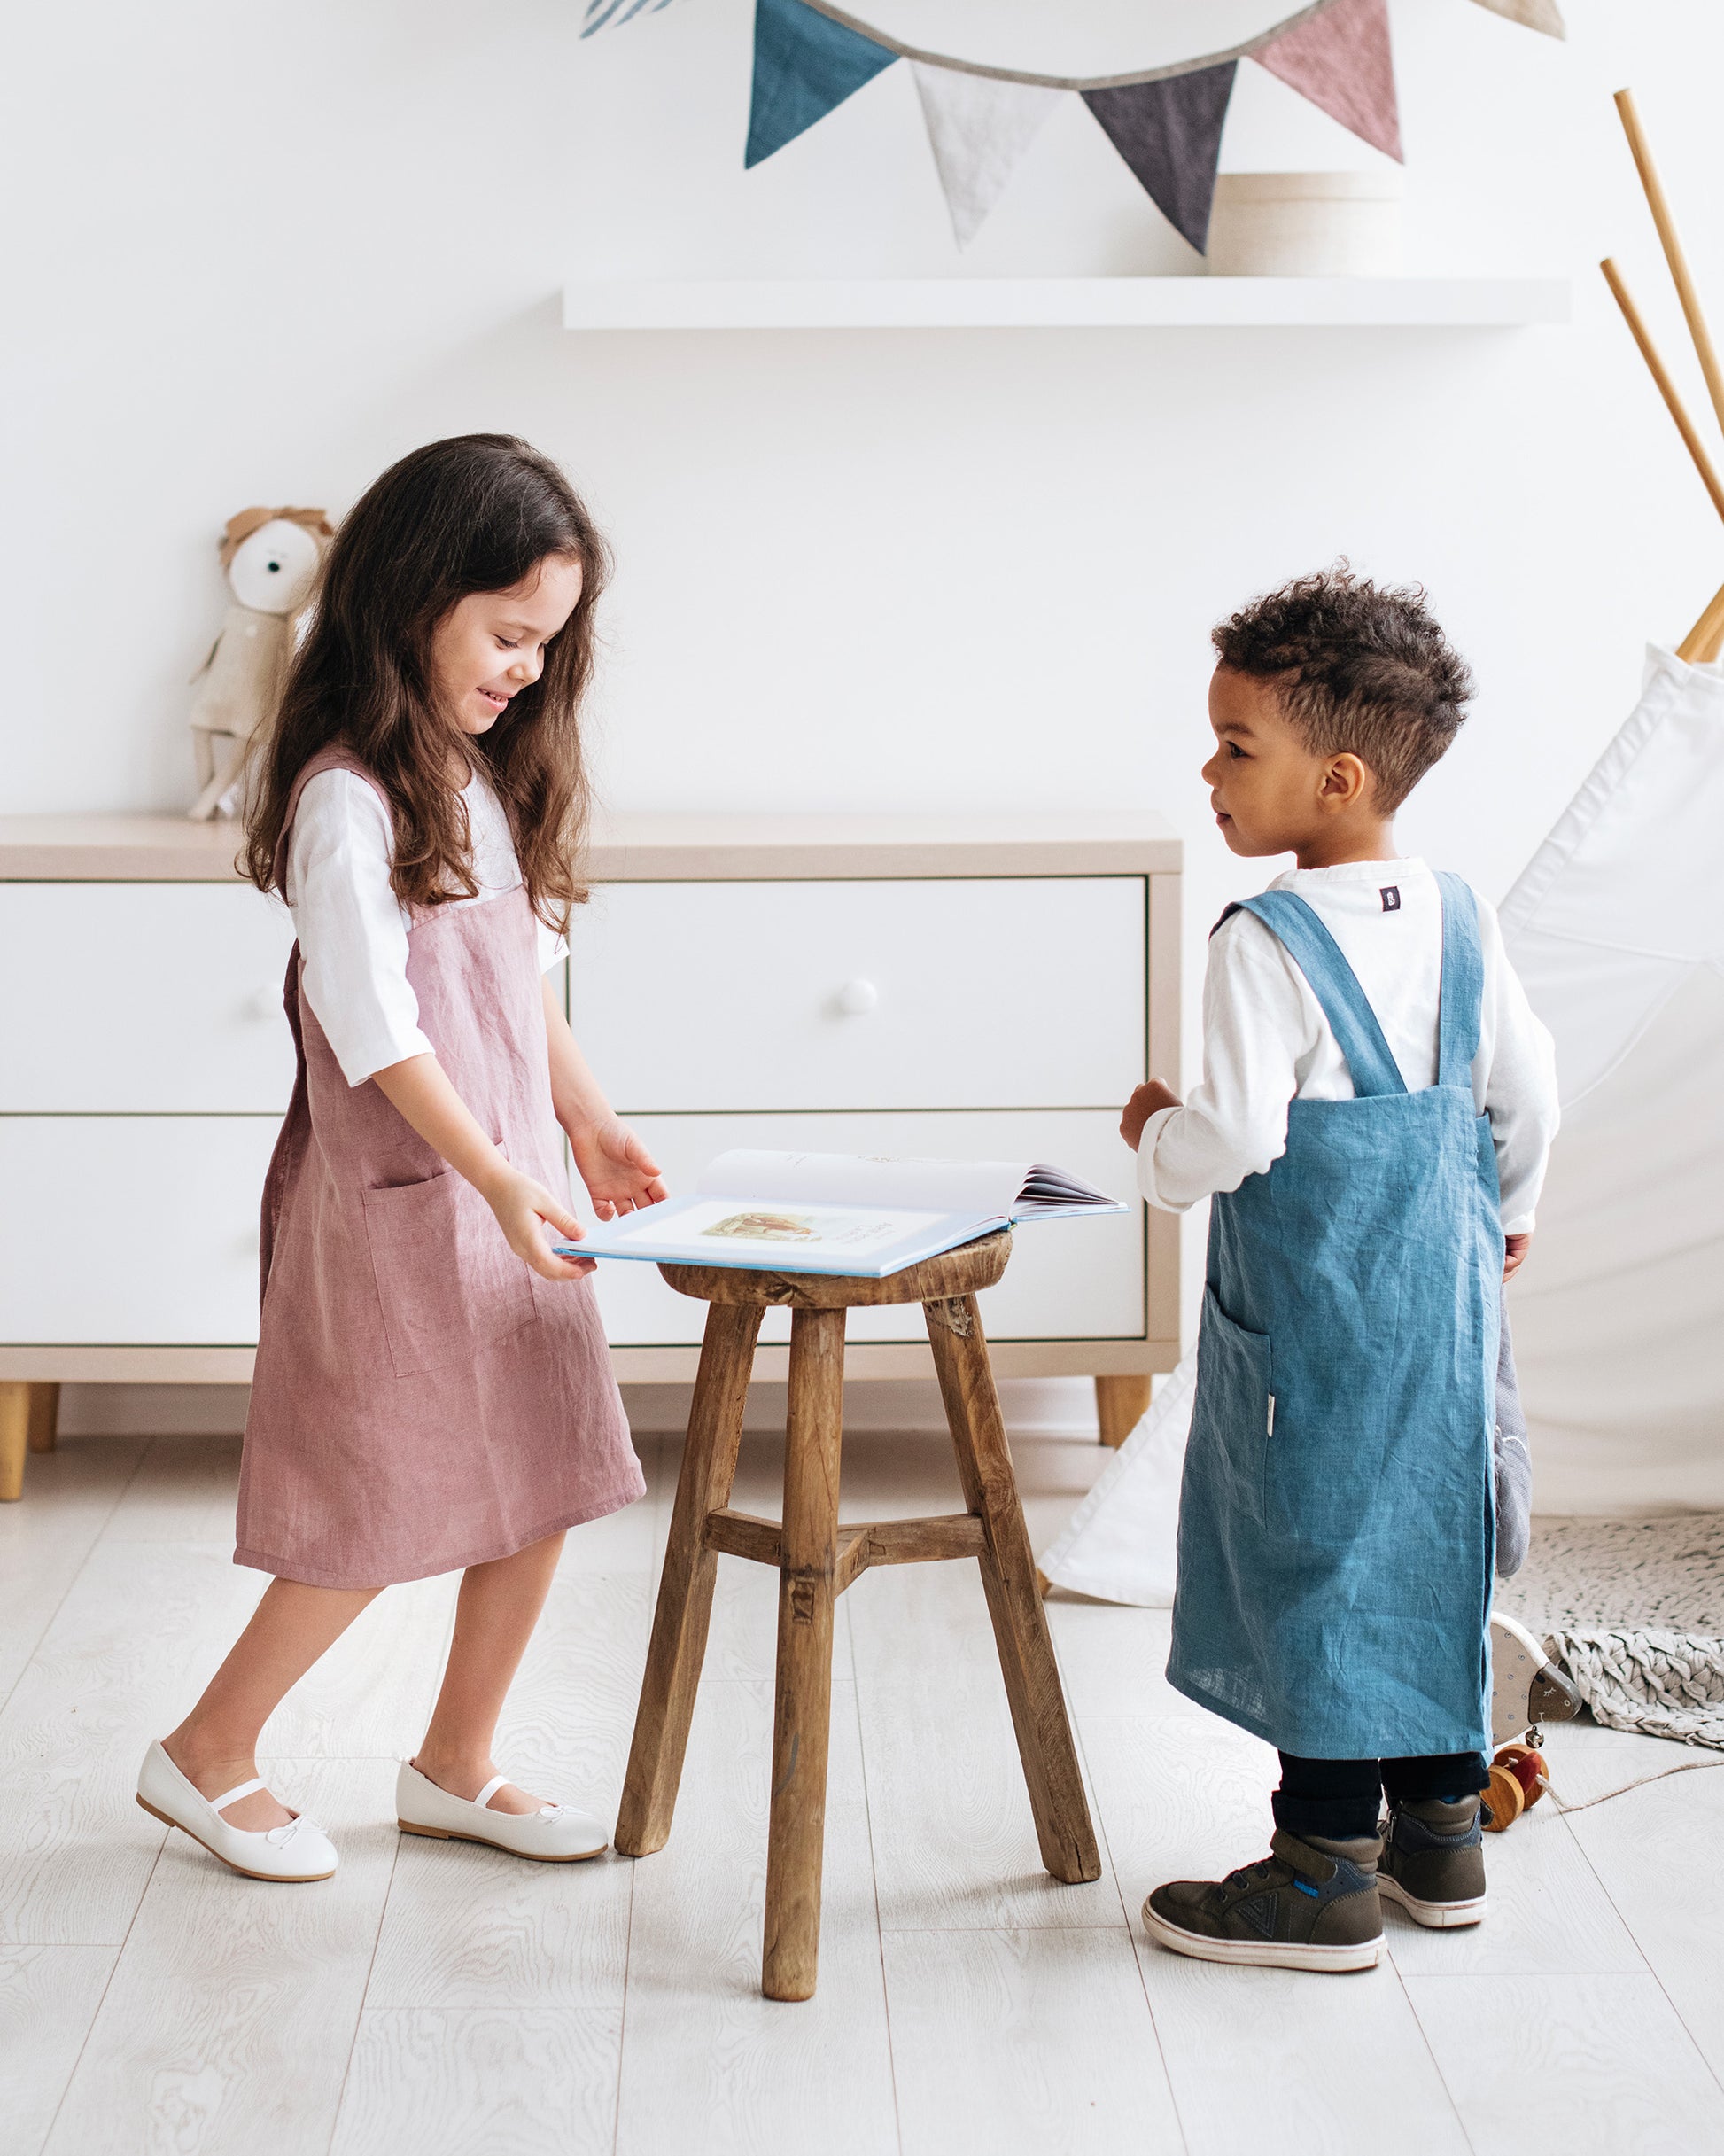 Linen apron for kids in Gray blue - MagicLinen